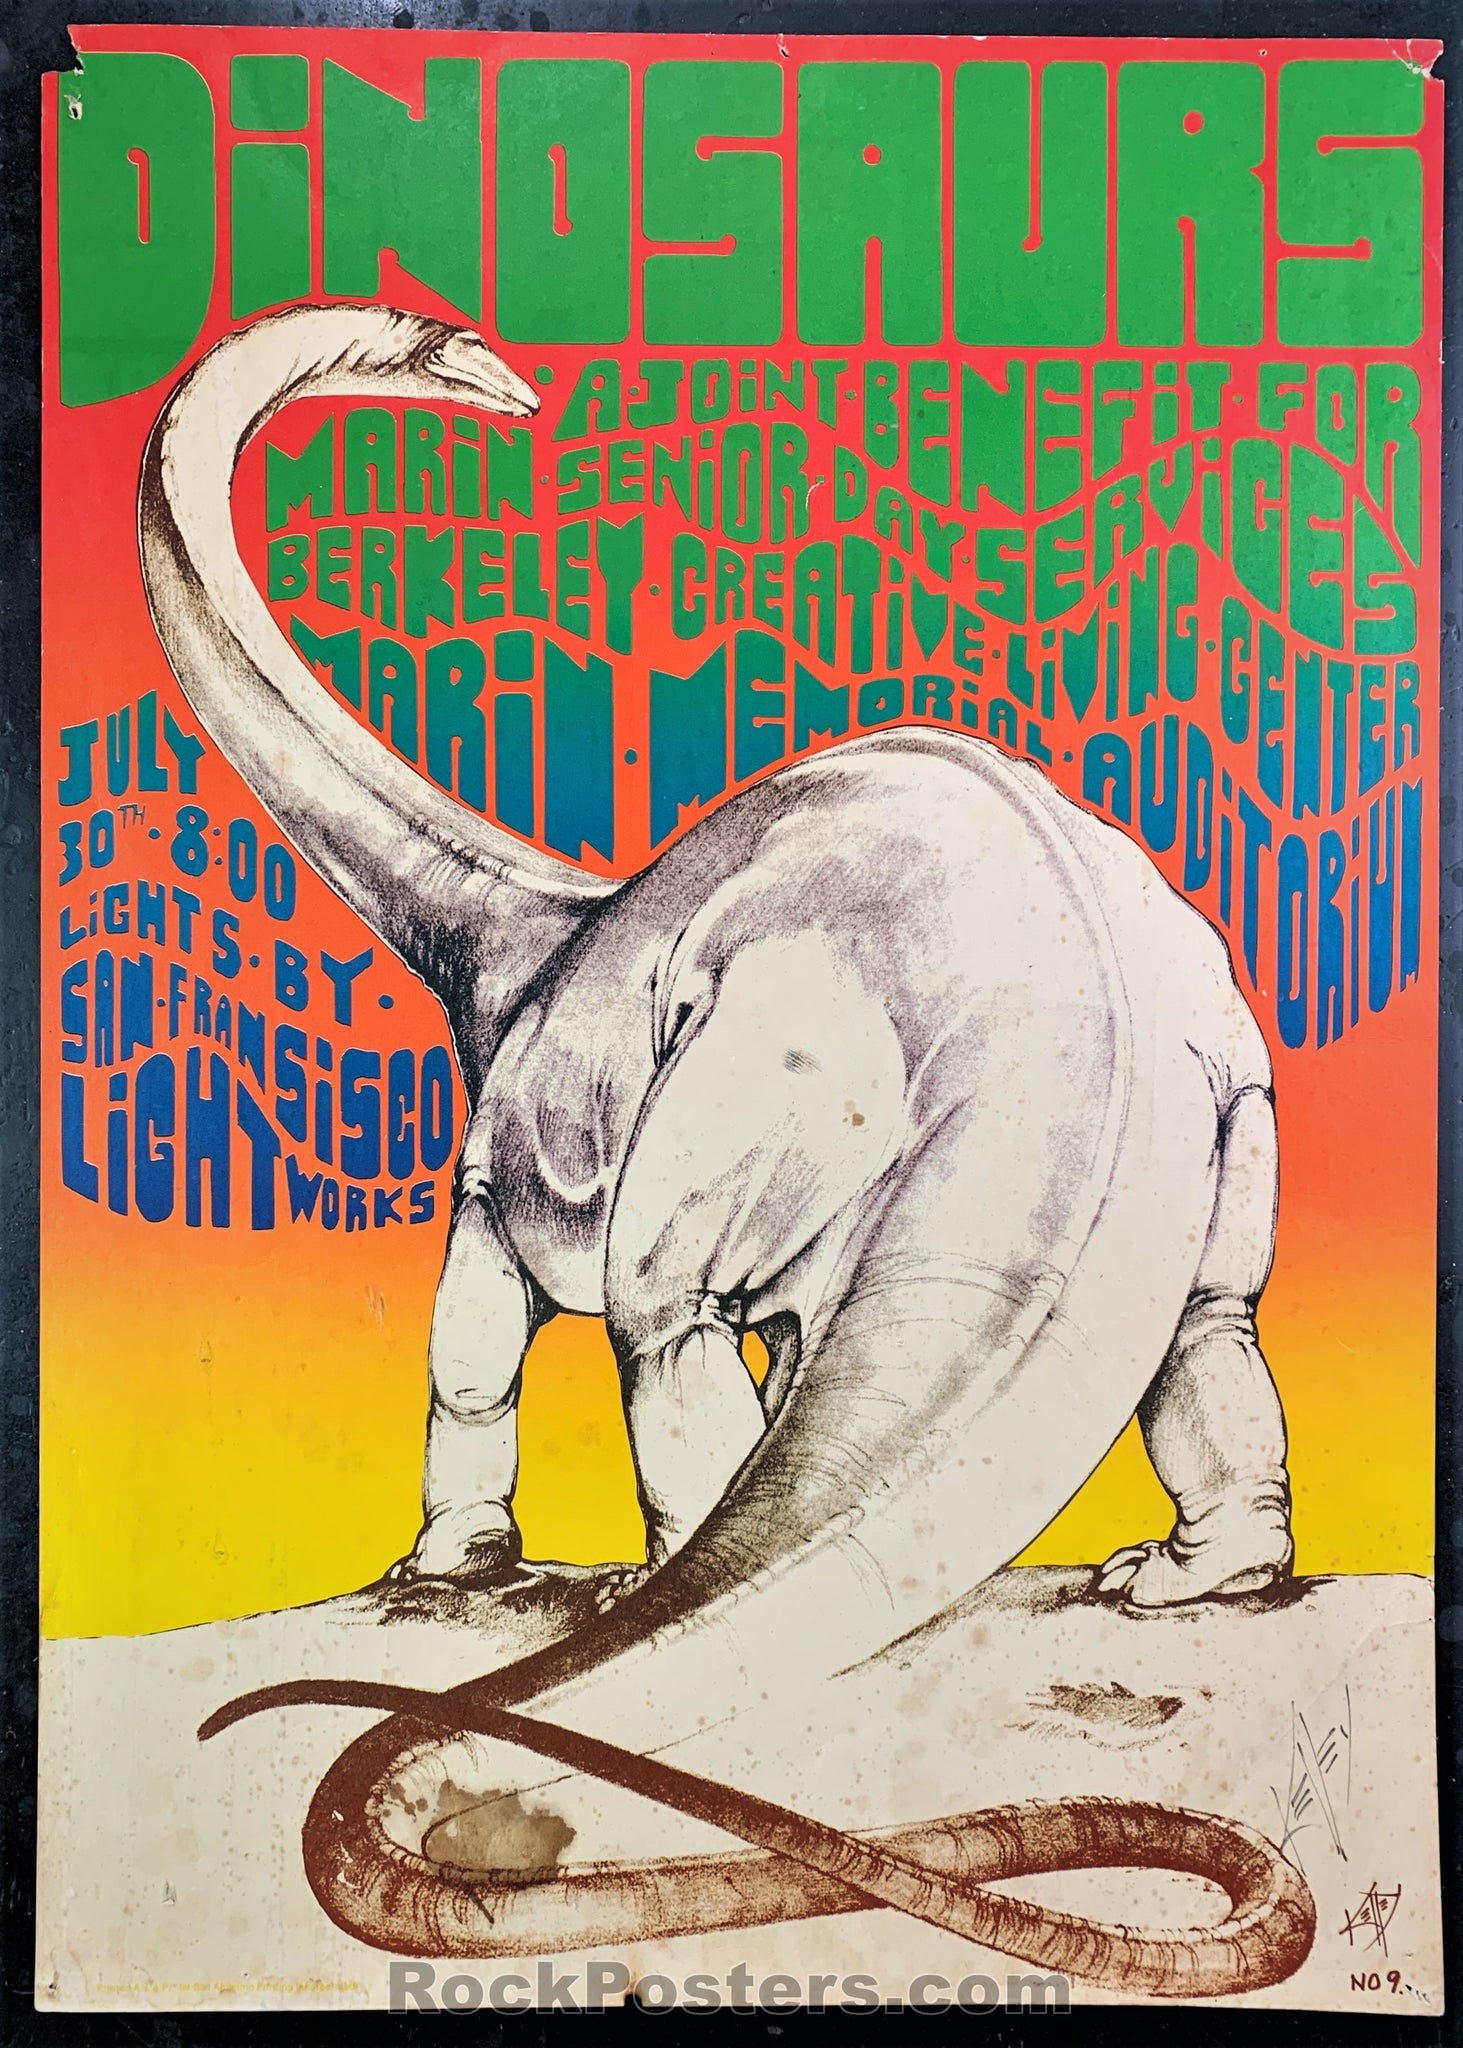 AOR 4.64 - The Dinosaurs Kelley Signed - 1984 Poster - Marin Veterans Auditorium - Rough